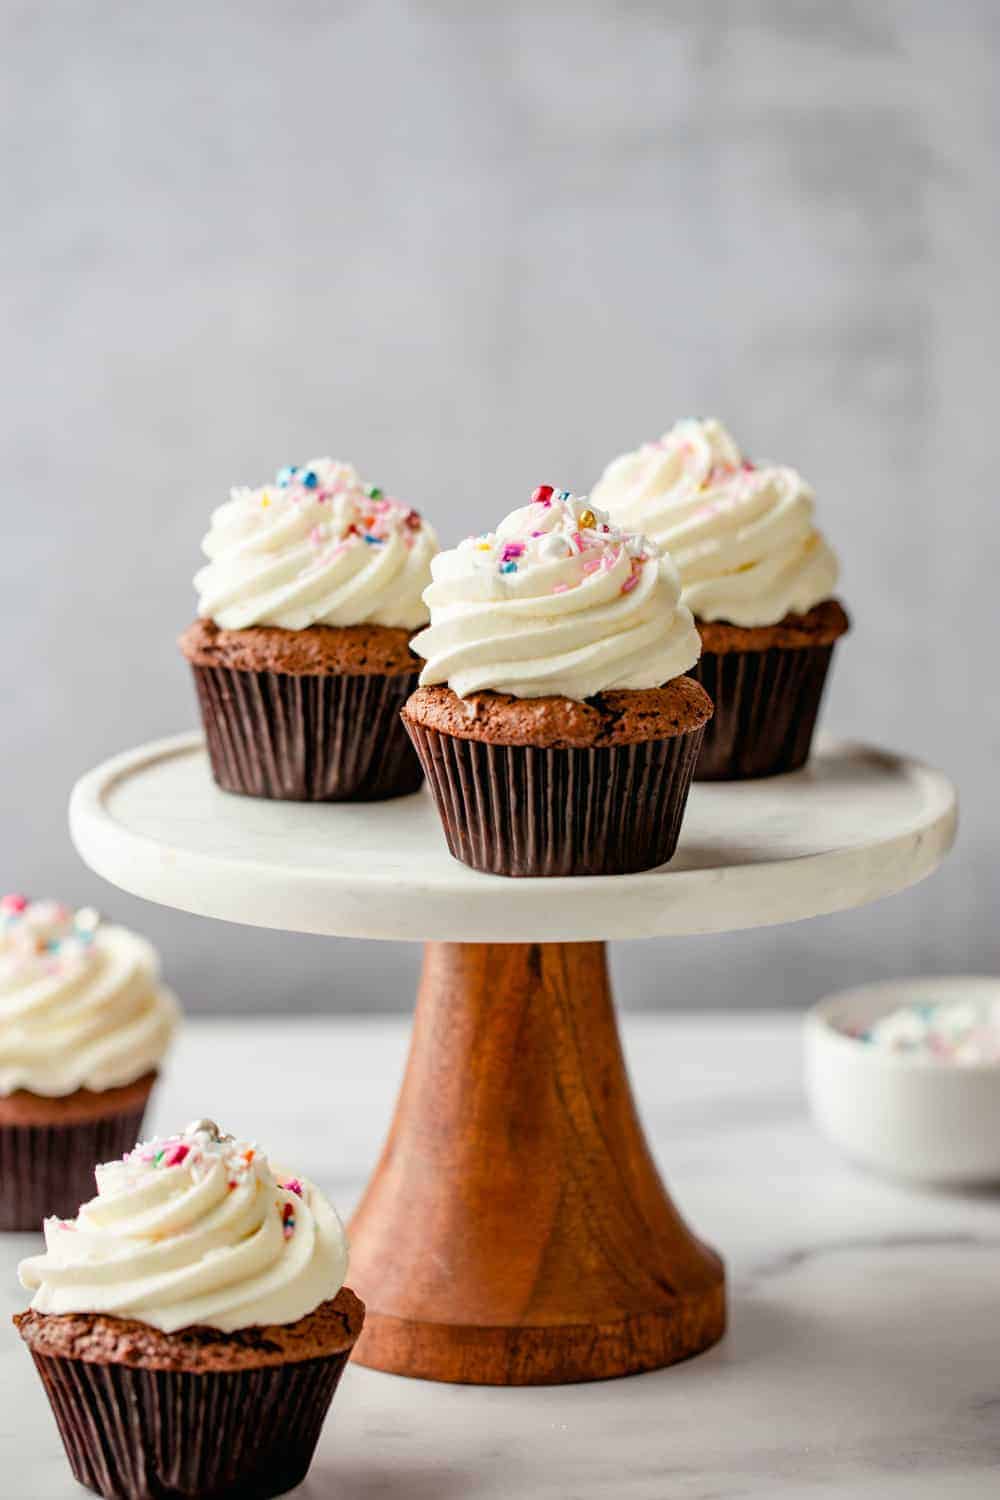 https://www.mybakingaddiction.com/wp-content/uploads/2013/09/buttercream-and-cupcakes-10-of-24_resized.jpg